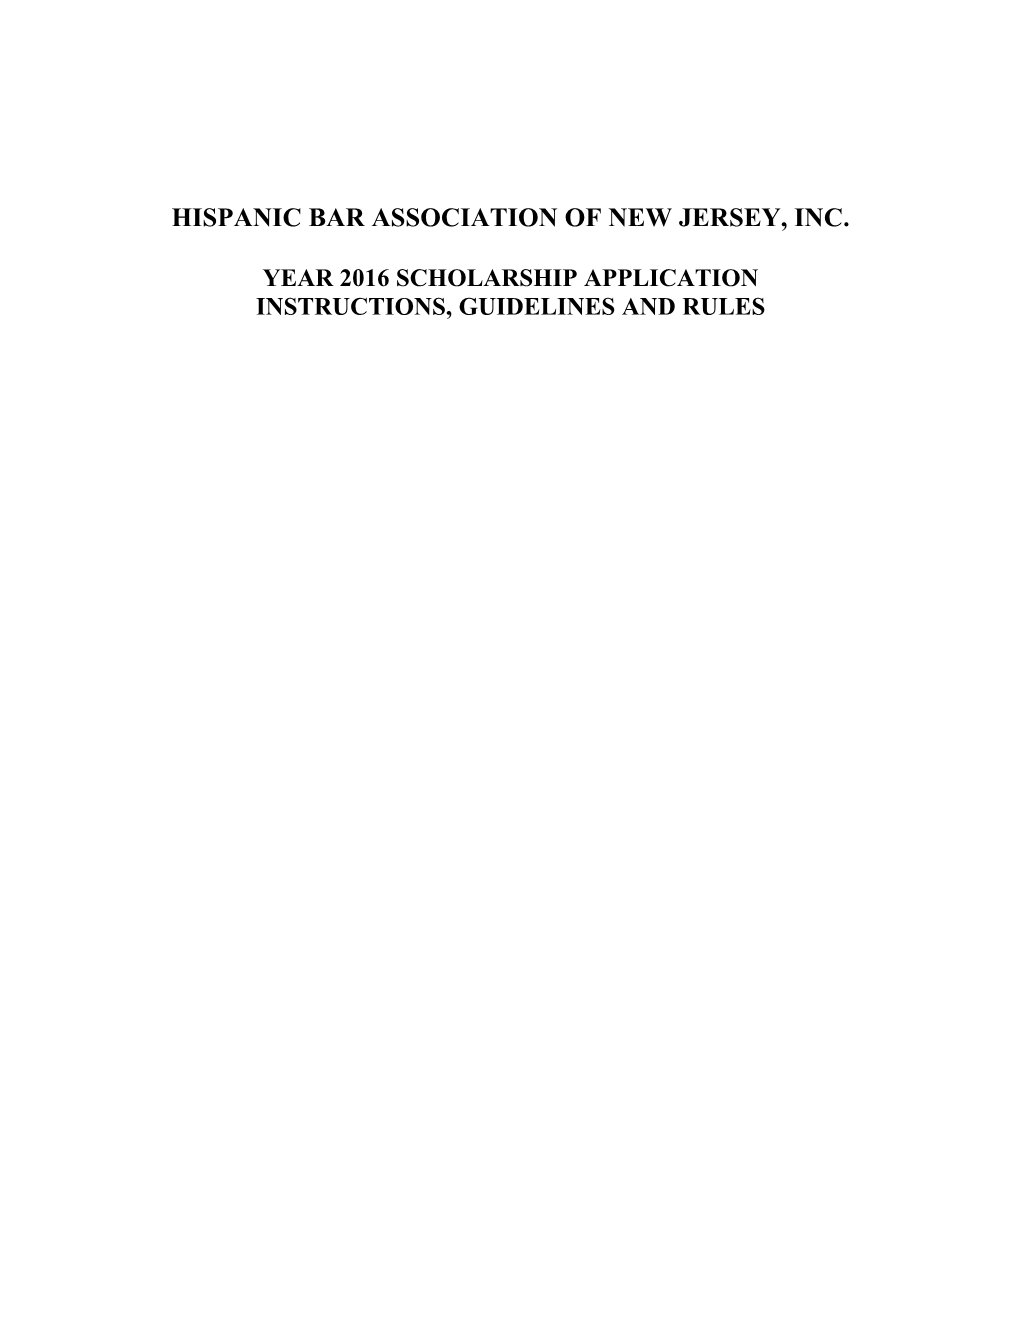 Hispanic Bar Association of New Jersey, Inc